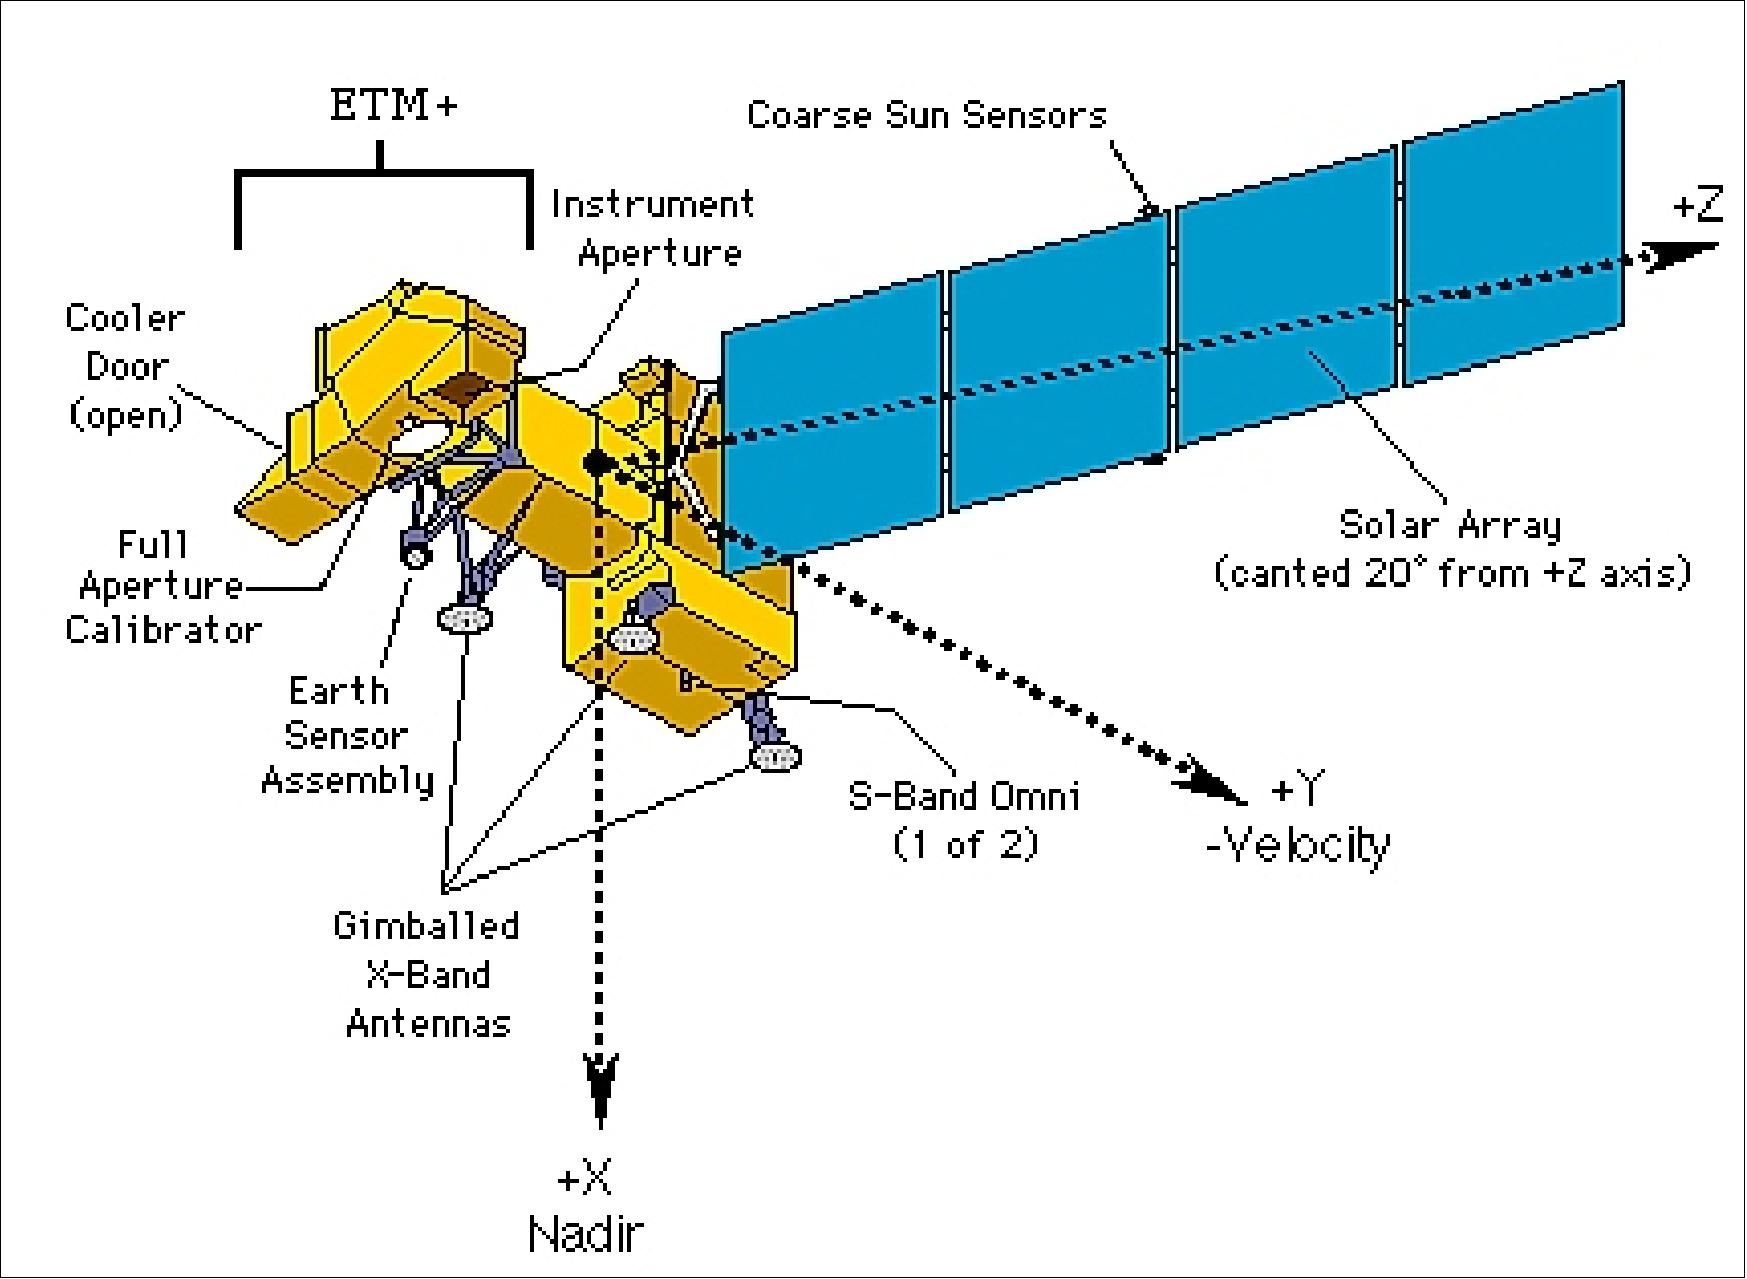 Figure 1: Illustration of the Landsat-7 spacecraft (image credit: NASA)